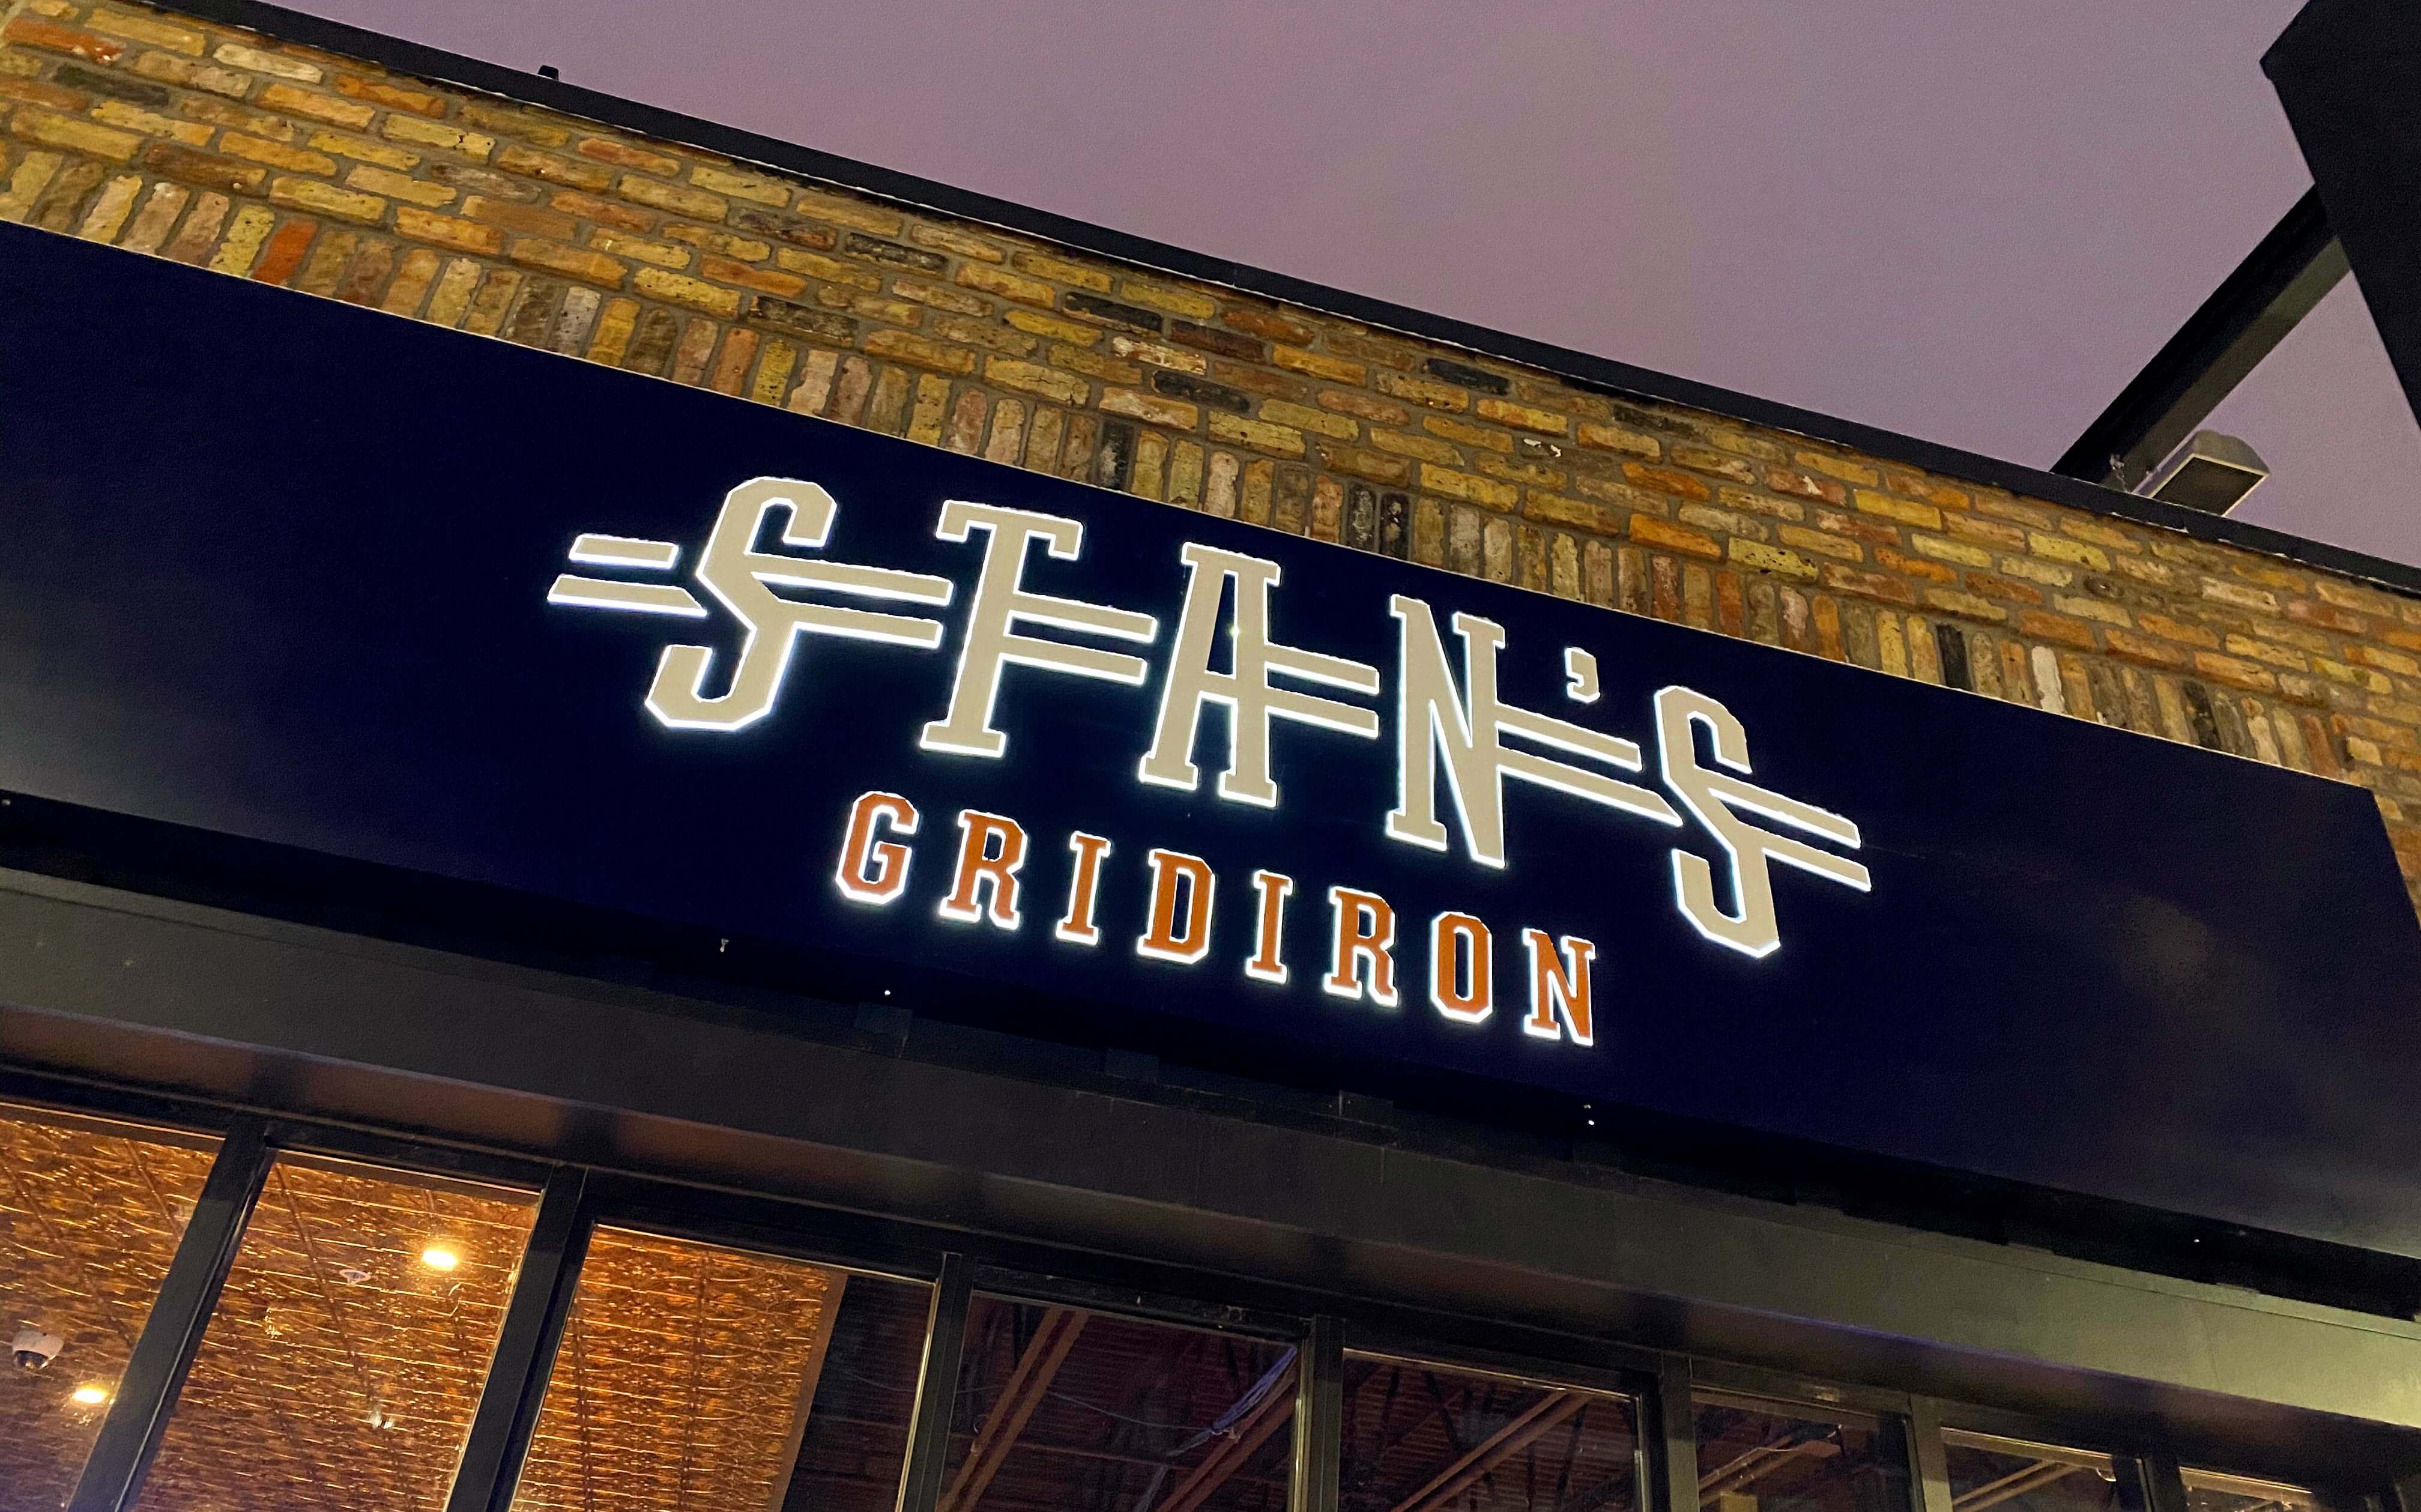 Stan's Gridiron - Branding